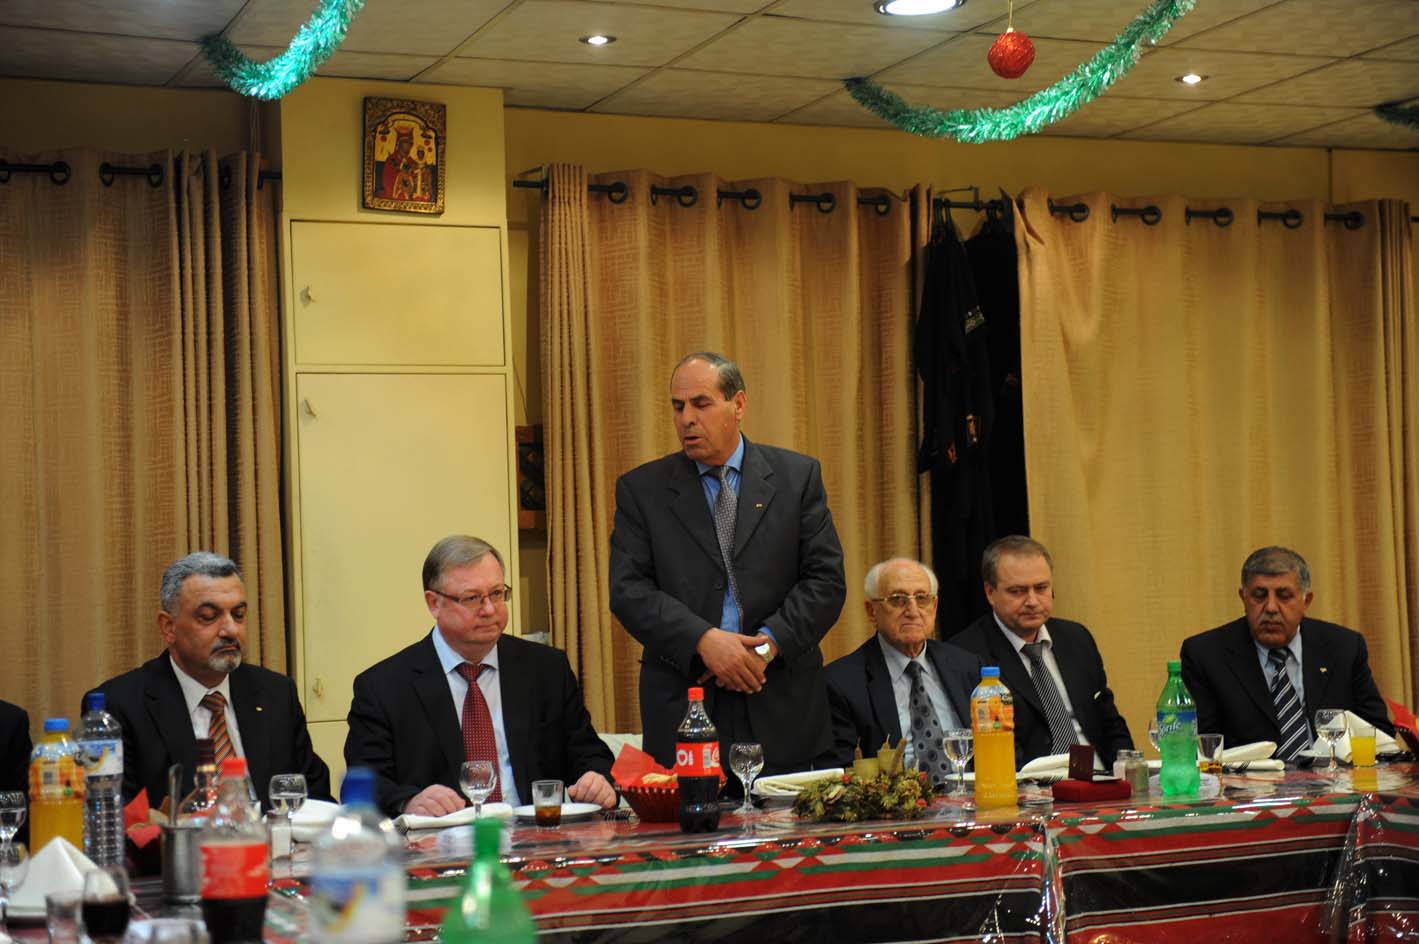 Привествие губернатора Вифлеема Мохаммеда аль-Мадани